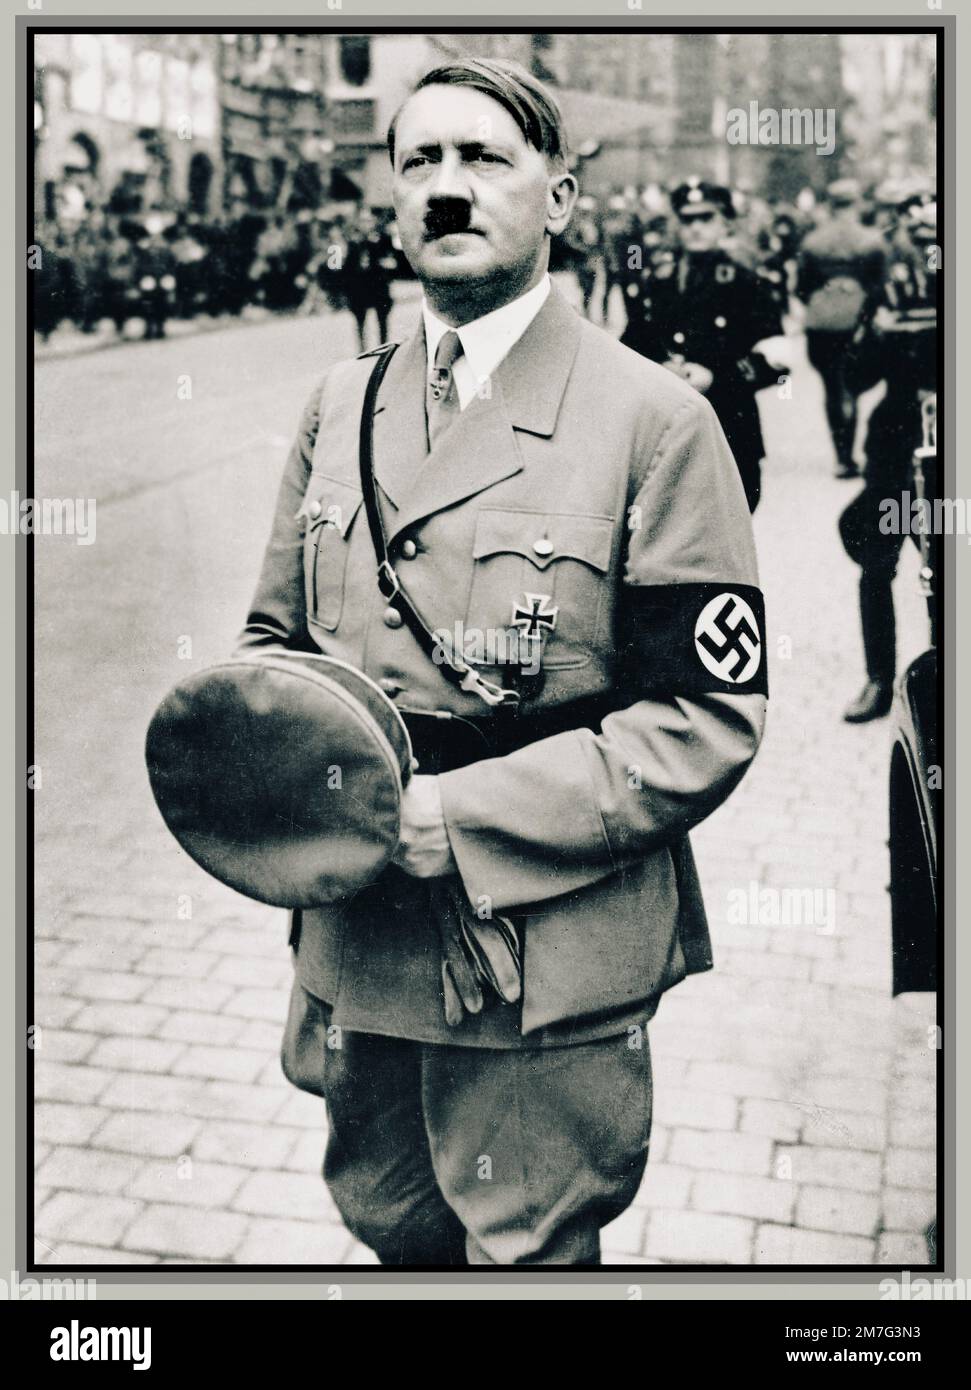 Adolf Hitler in uniform with Swastika armband at Nuremberg Nazi parade Nazi Germany 1930s Stock Photo